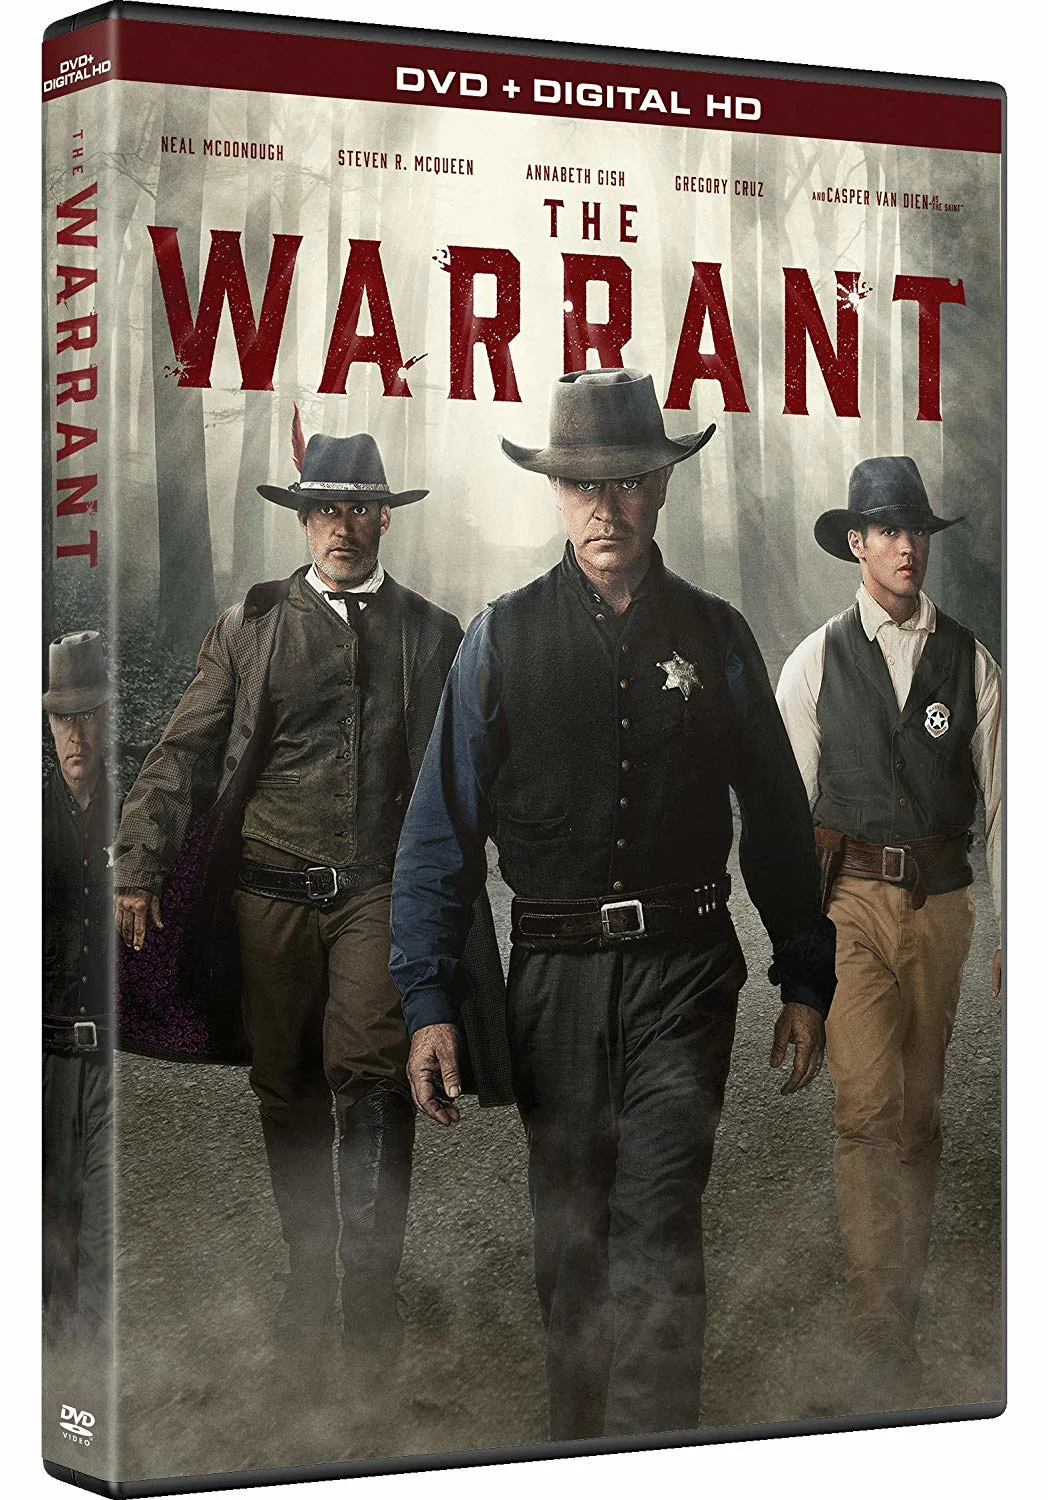 Warrant, The (DVD) on MovieShack